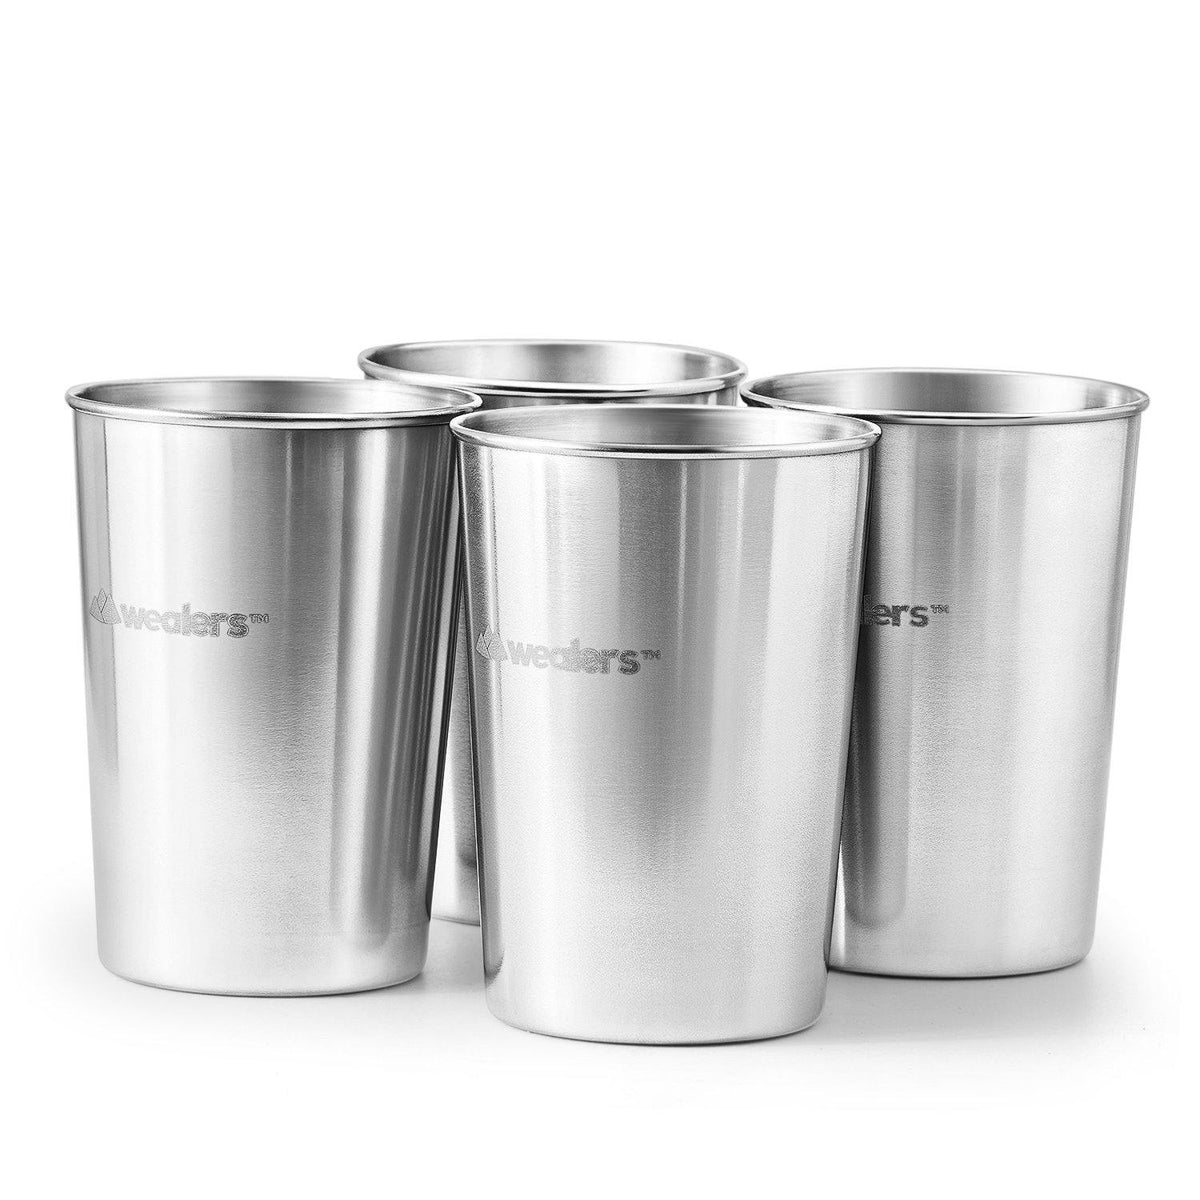 4 Stainless Steel Cups - Wealers